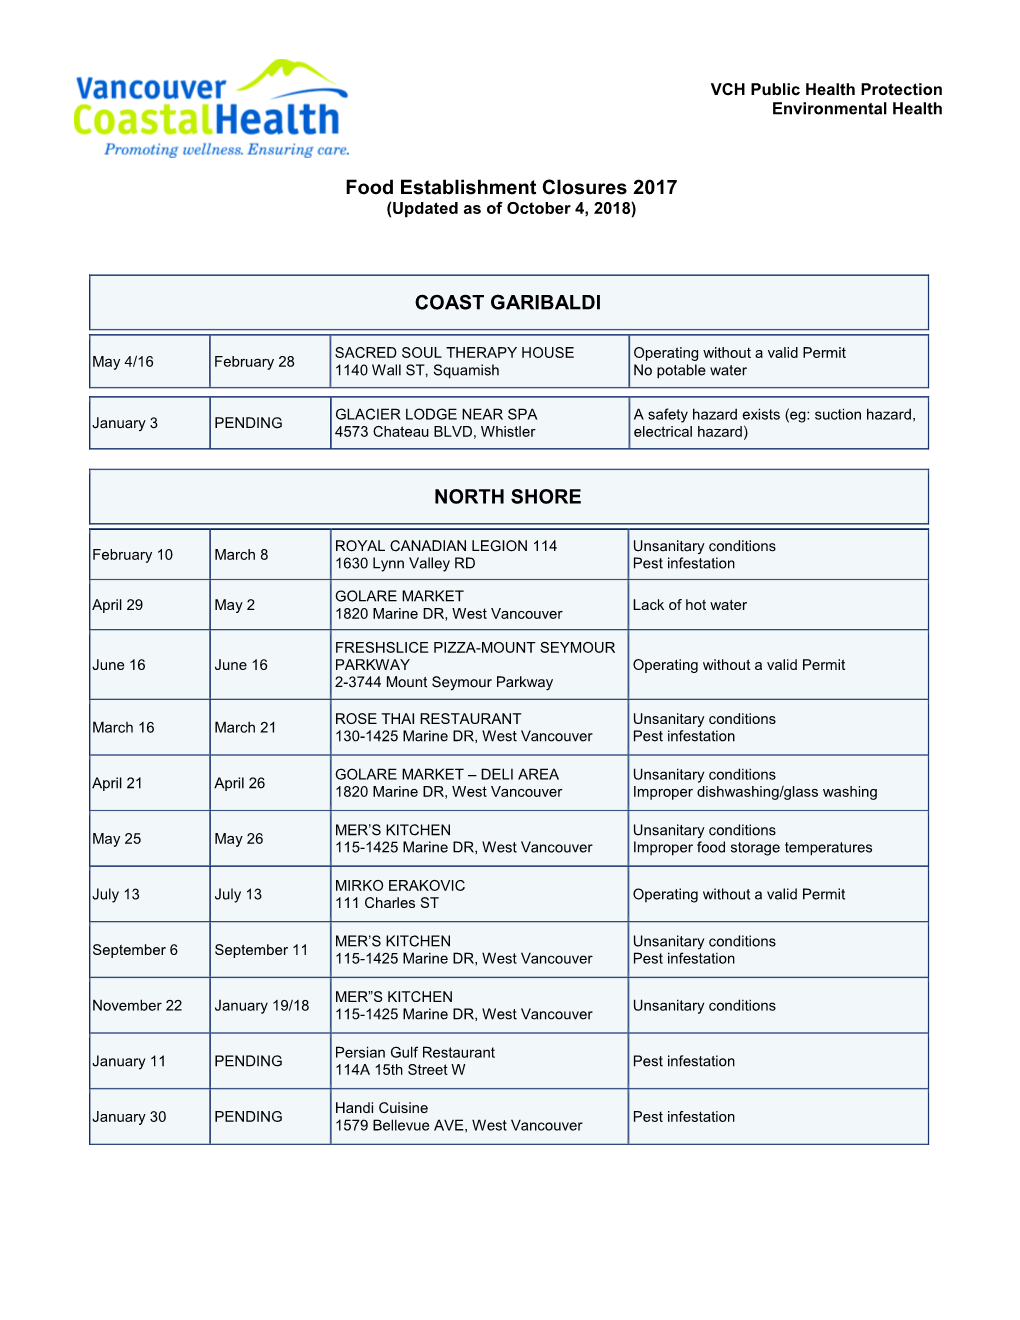 Food Establishment Closures 2017 (Updated As of October 4, 2018)